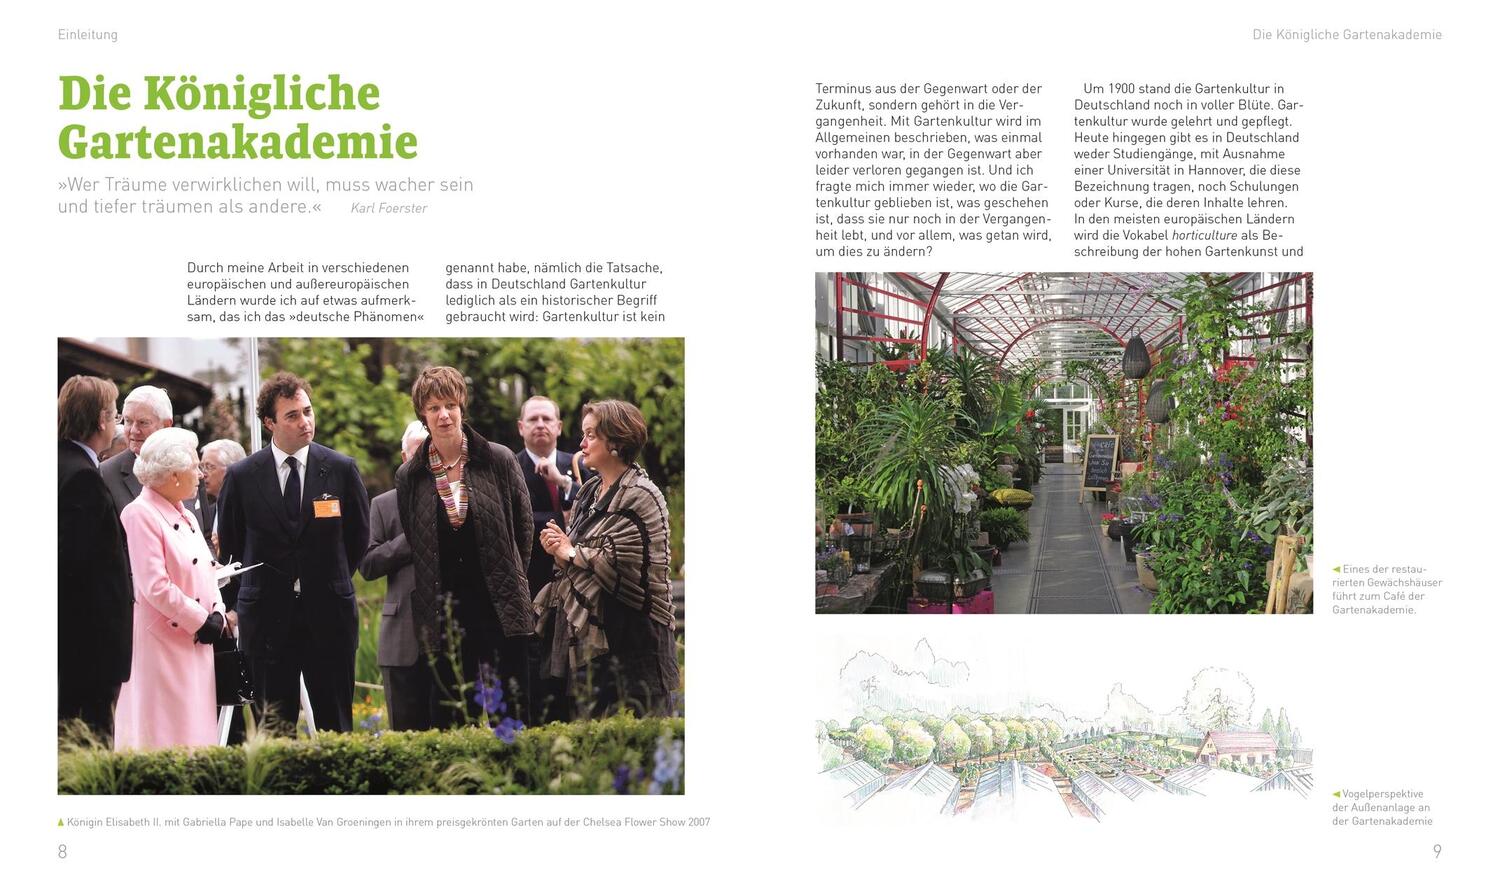 Bild: 9783831043873 | Praxisbuch Gartengestaltung | Gabriella Pape (u. a.) | Buch | 128 S.